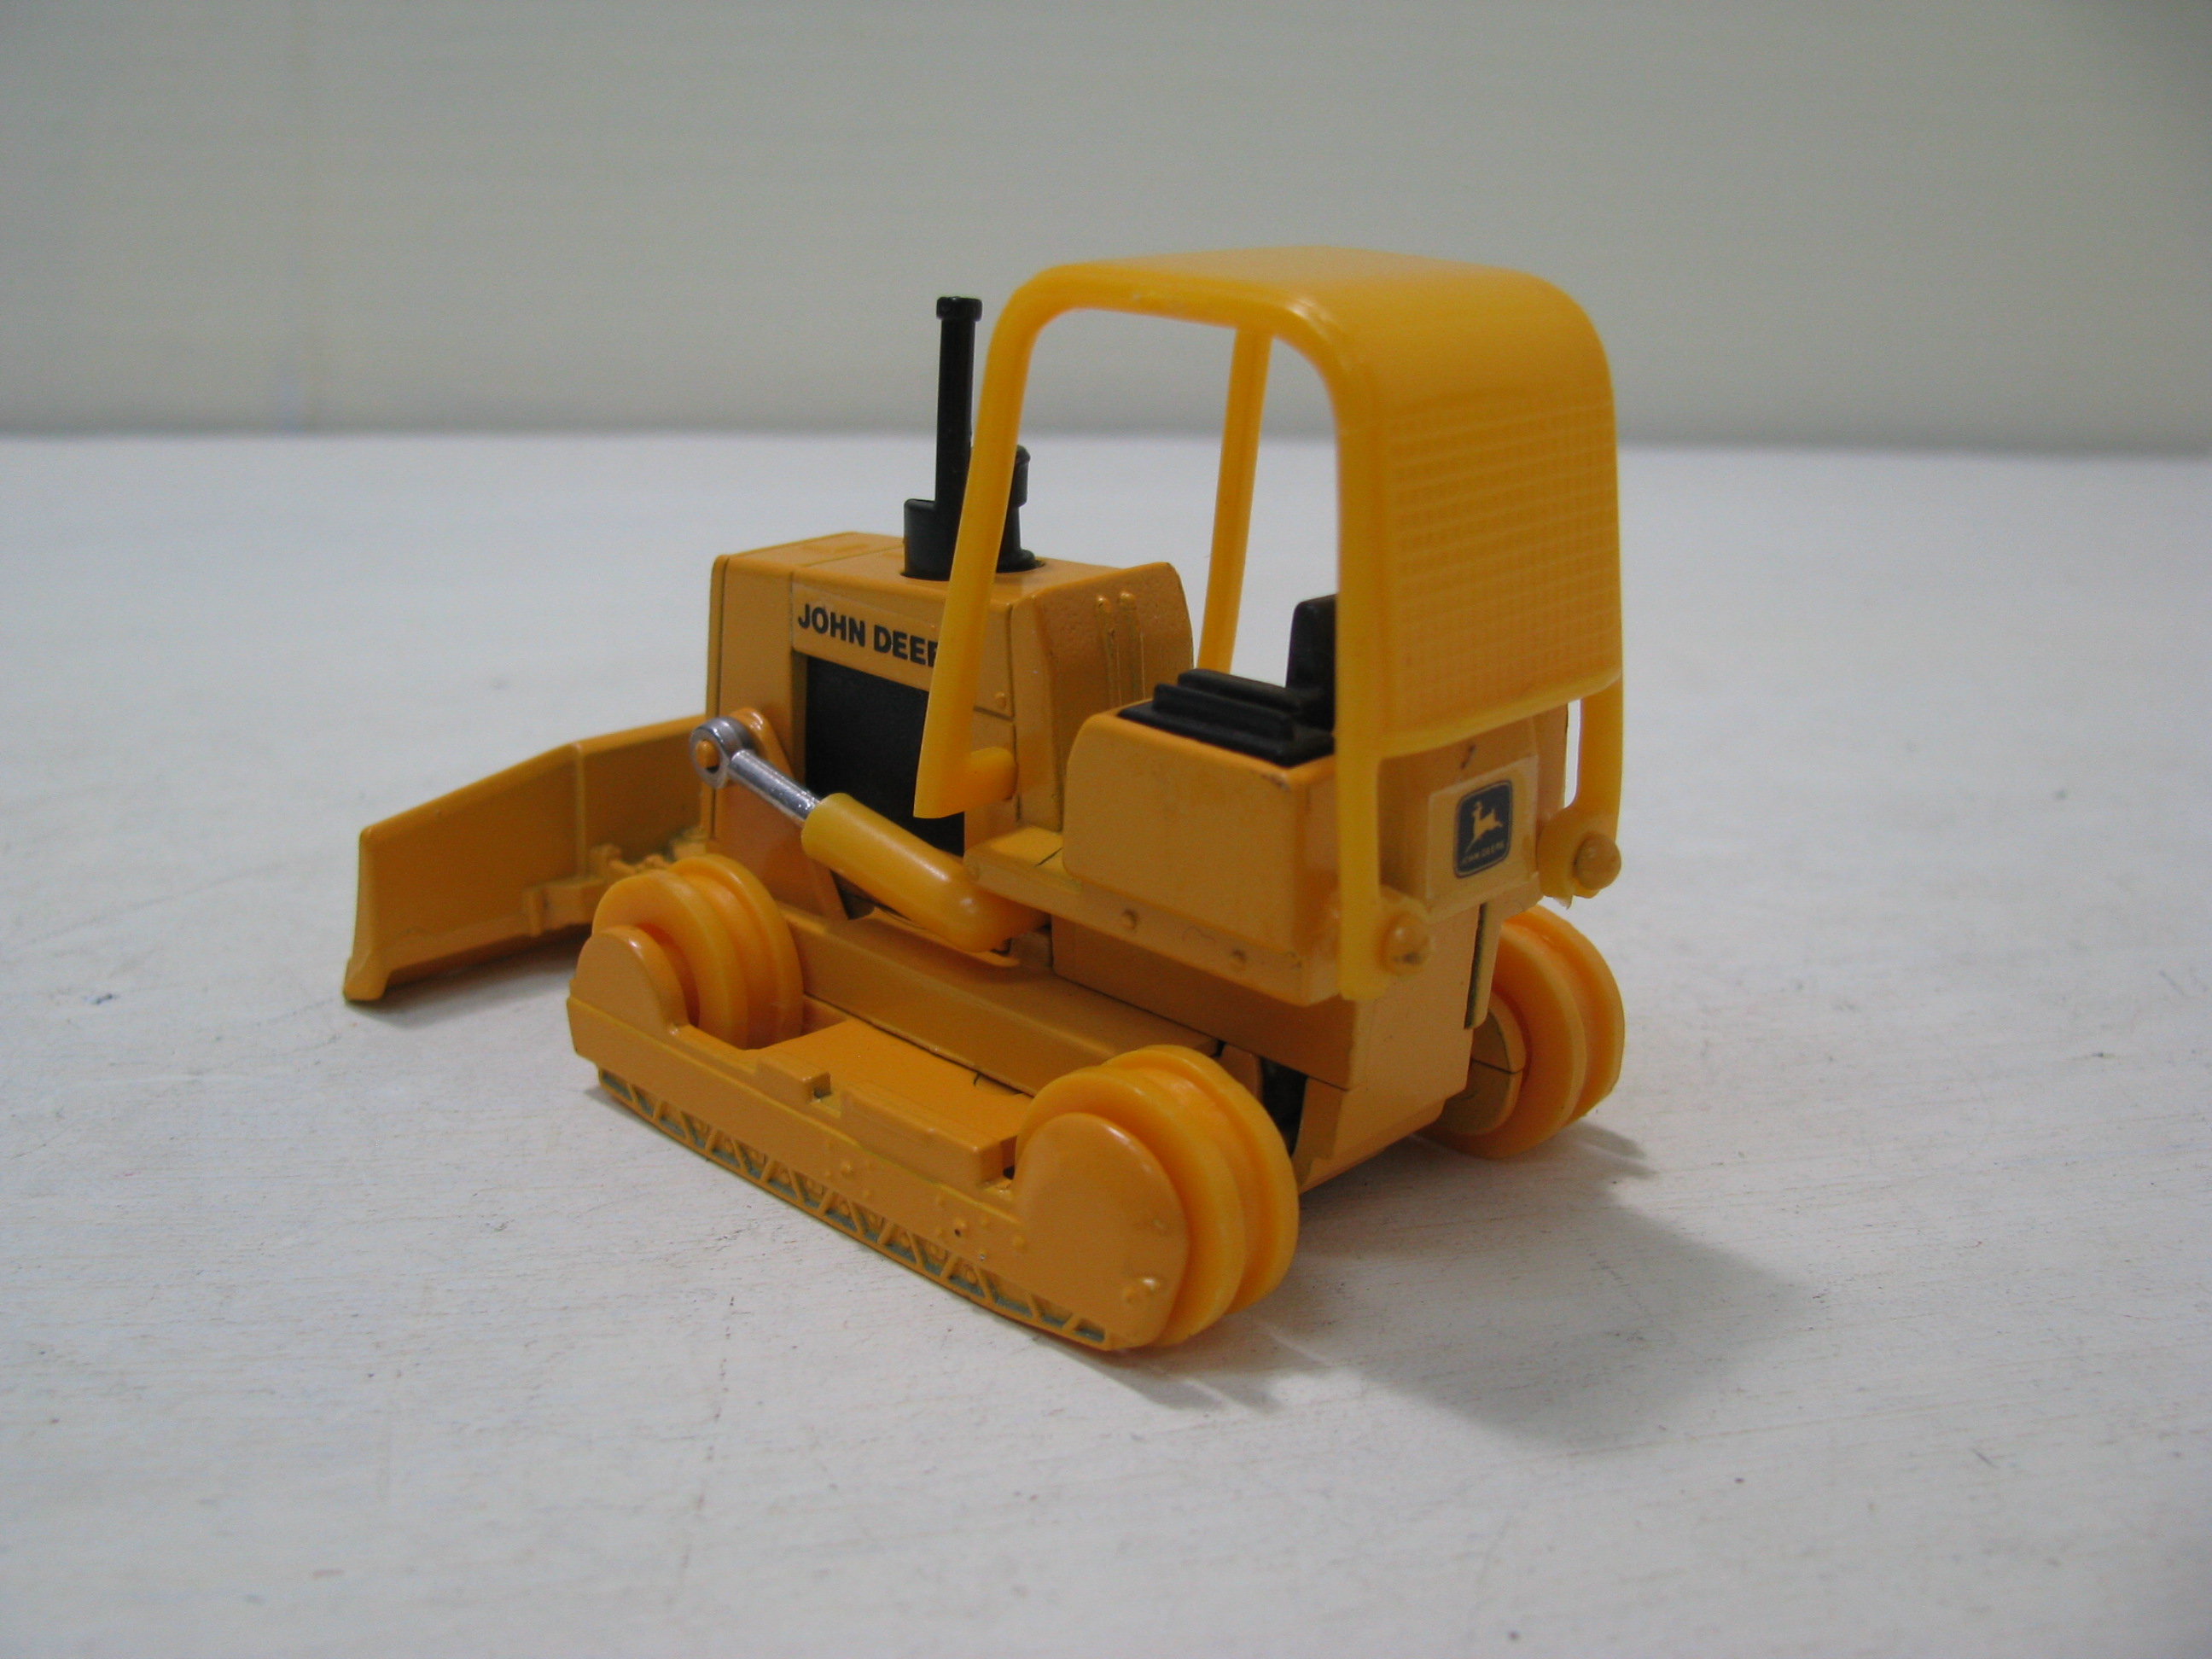 Ertl John Deere Bulldozer 1:64 Scale (No Box) | eBay